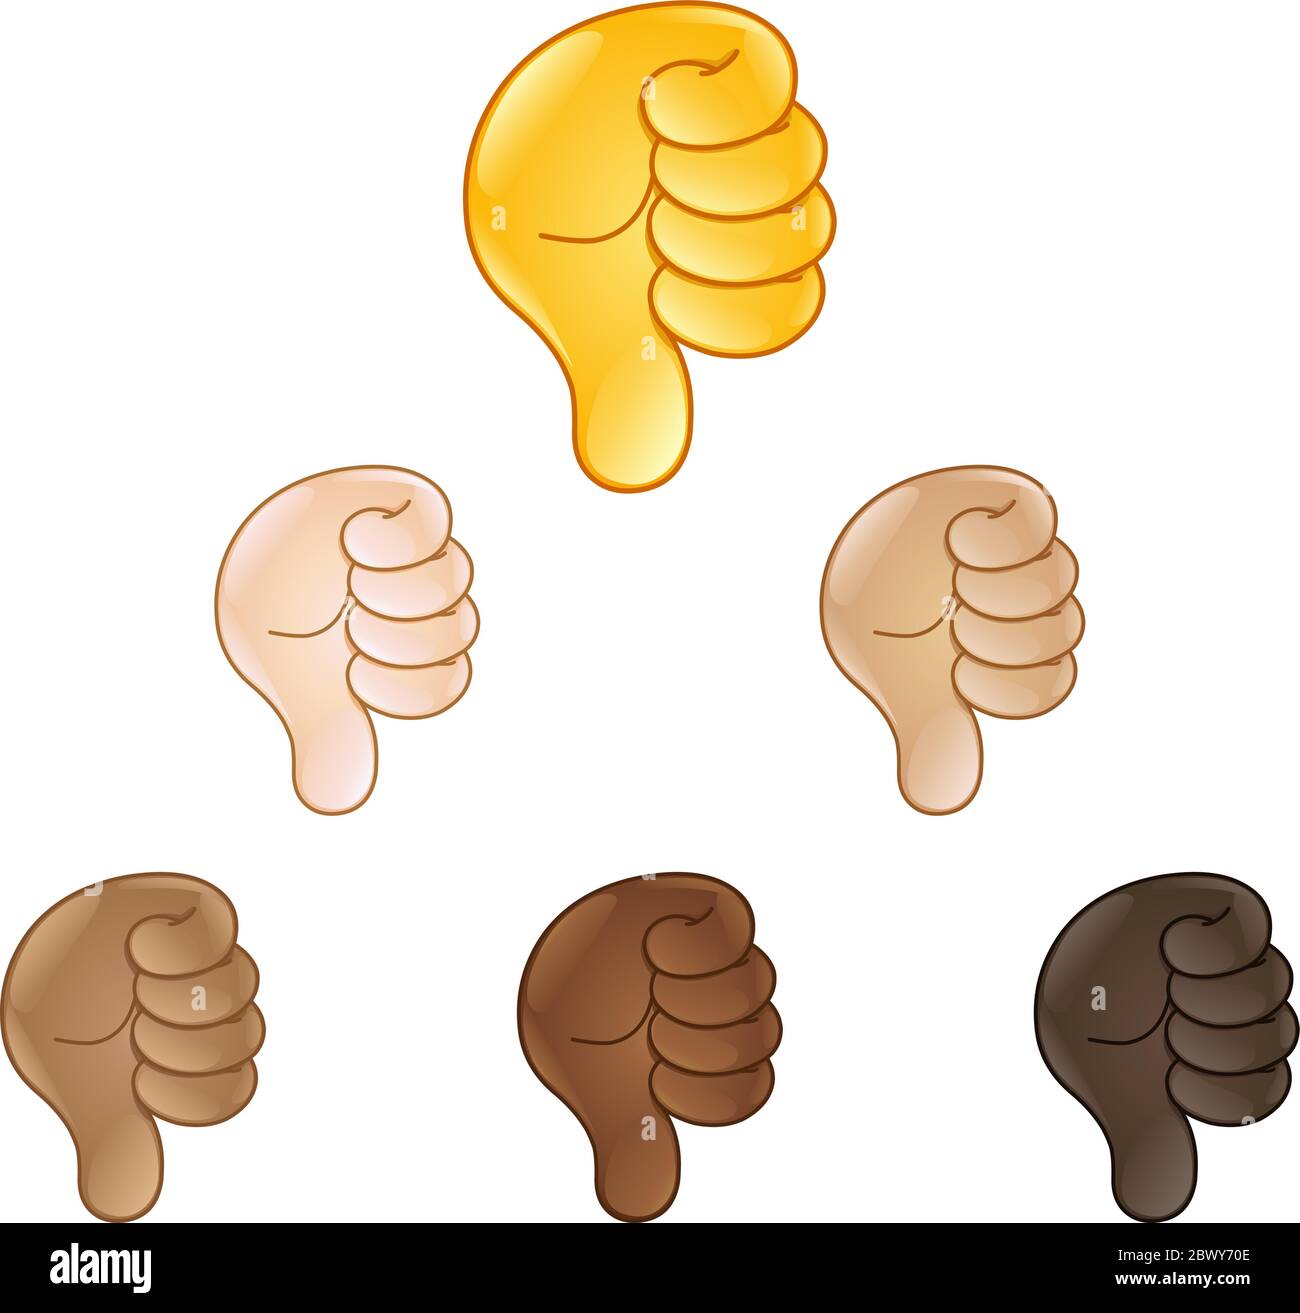 Thumbs down hand sign emoji set of various skin tones Stock Vector